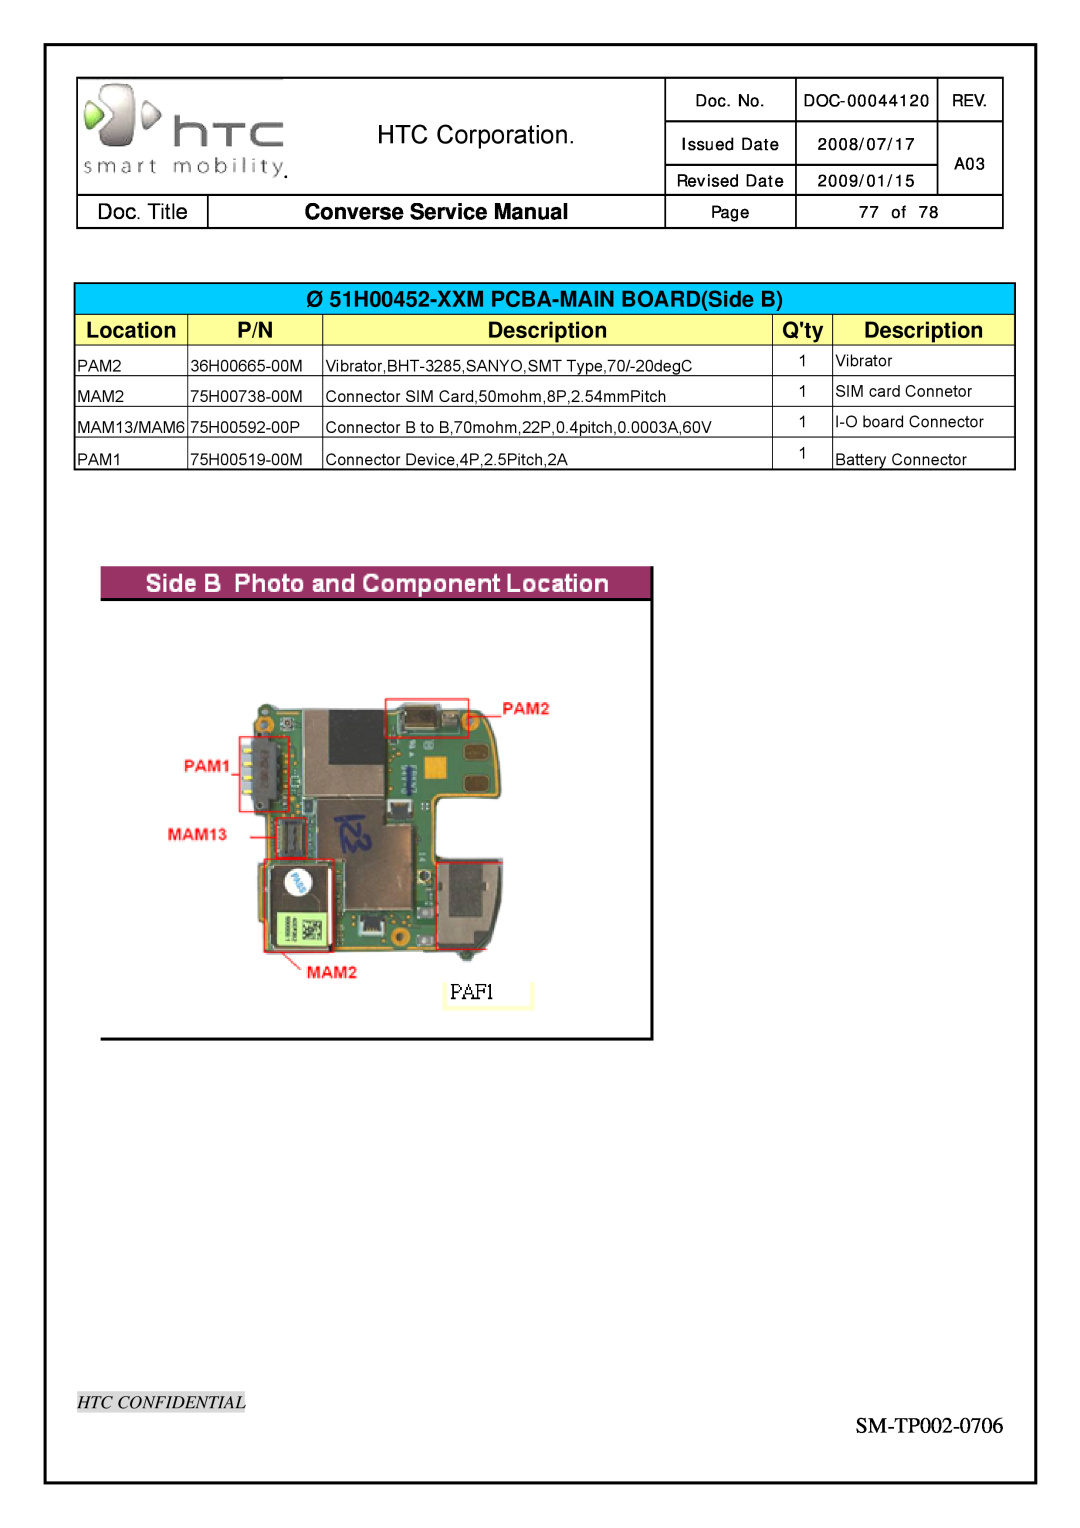 HTC SM-TP002-0706 Ø 51H00452-XXM PCBA-MAIN BOARDSide B, Location, HTC Corporation, Converse Service Manual, Description 